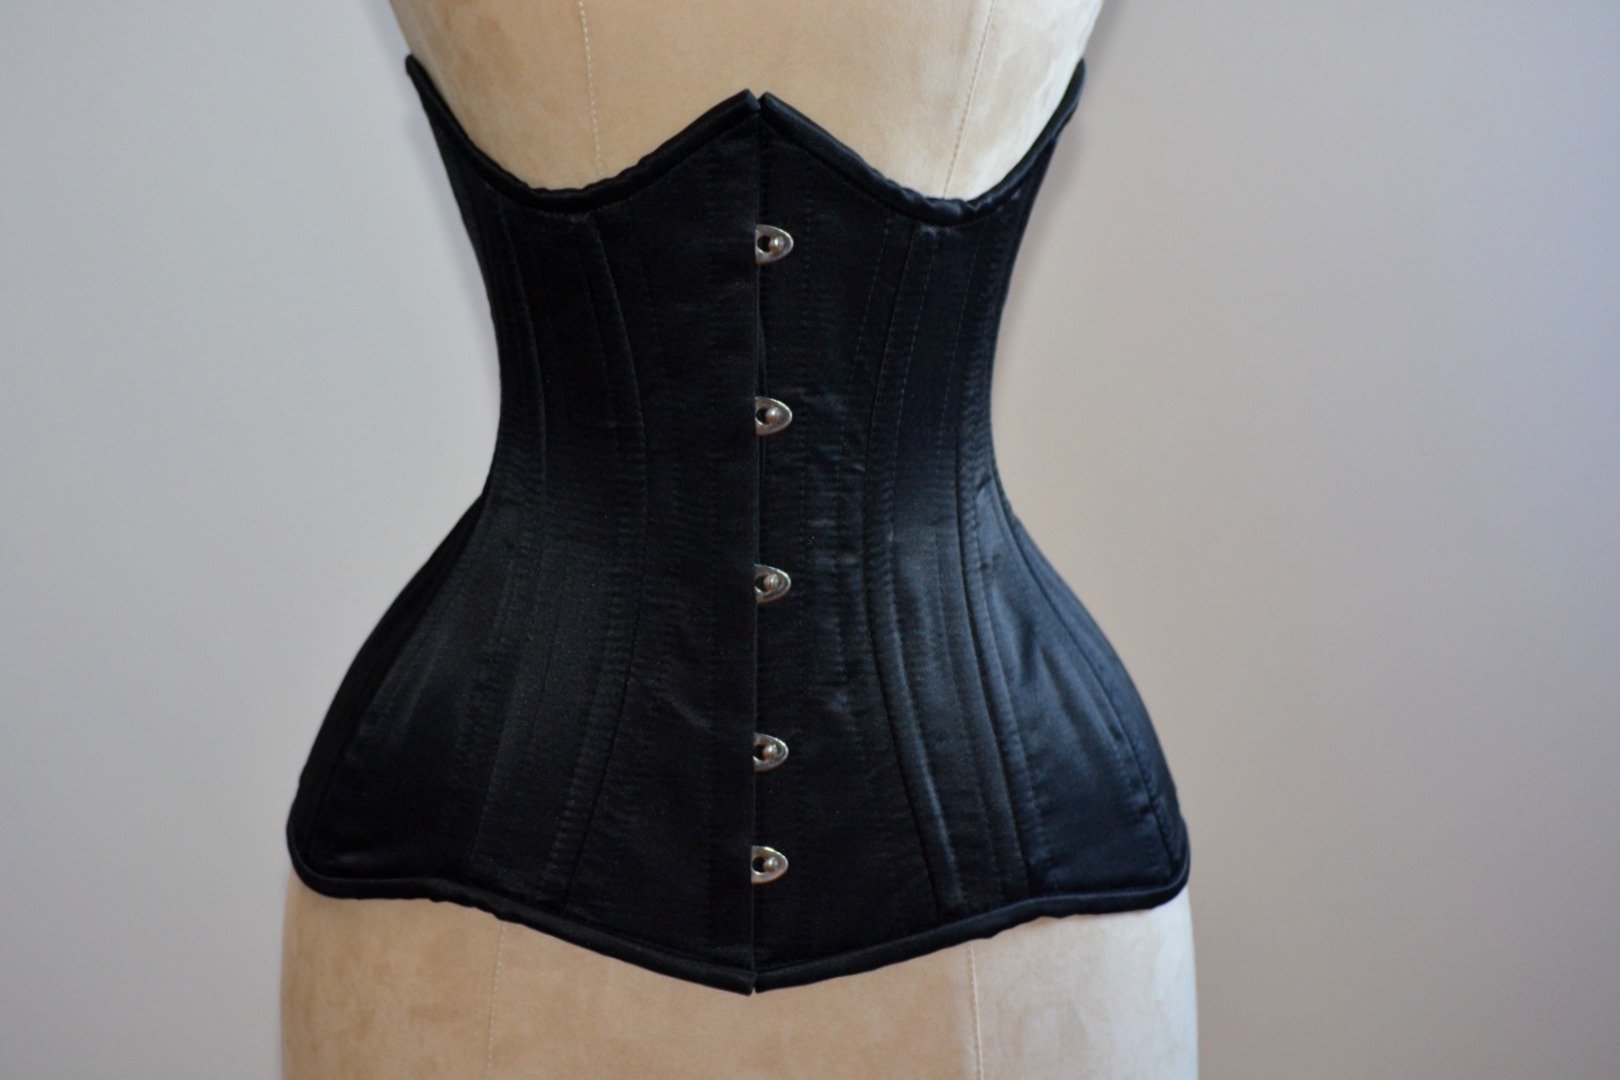 Classic taffeta corset red and black. Steel-boned corset for tight